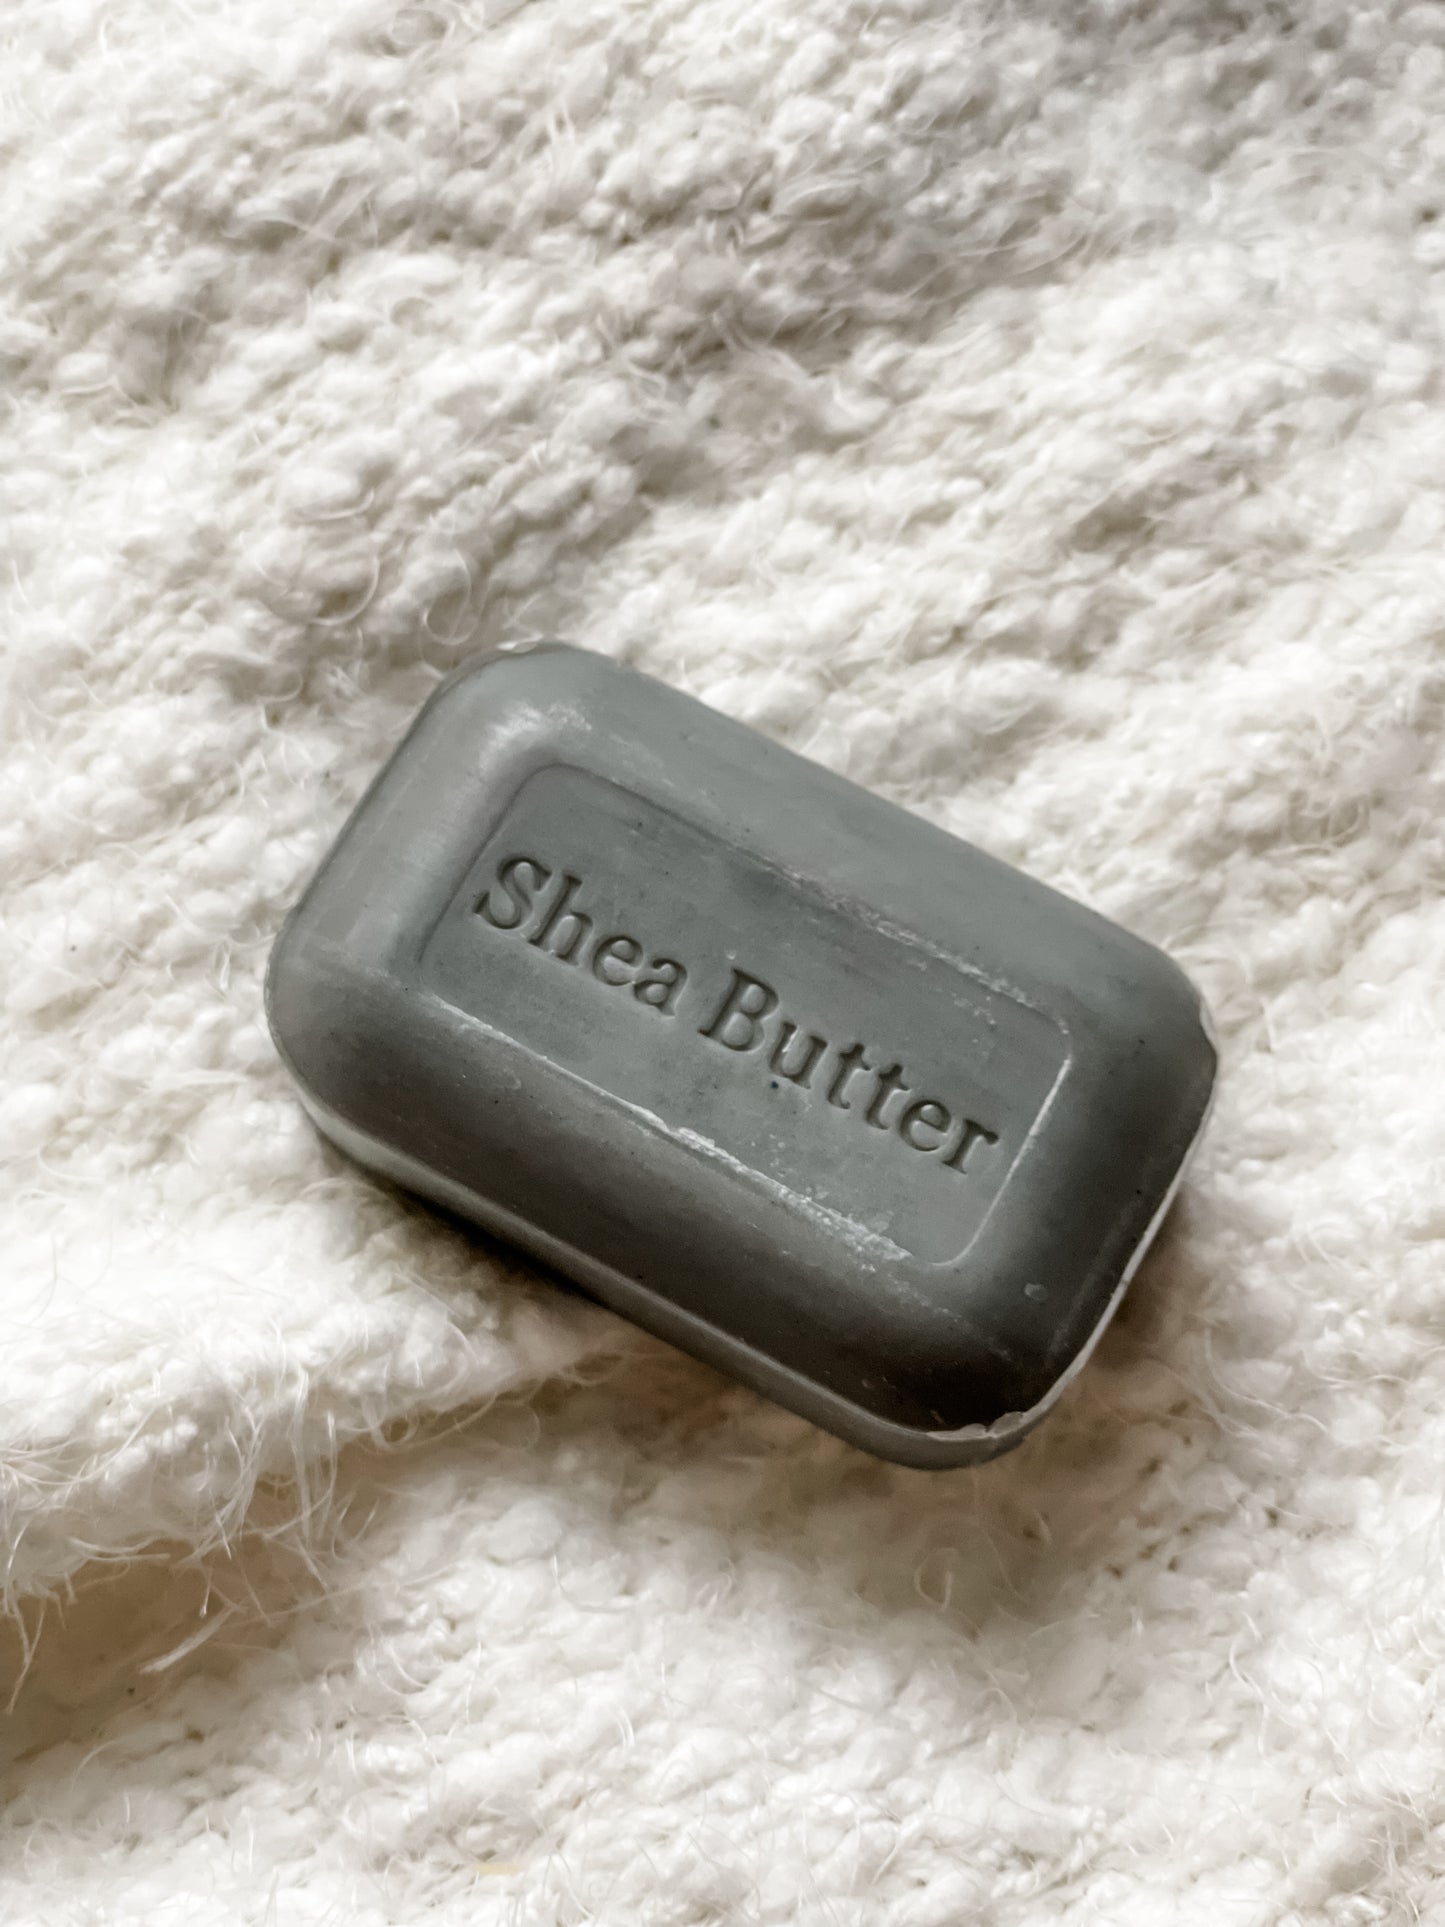 Shea Butter Gentle Exfoliating Unscented Vegan Plant-Based Soap - Zero Waste + Biodegradable